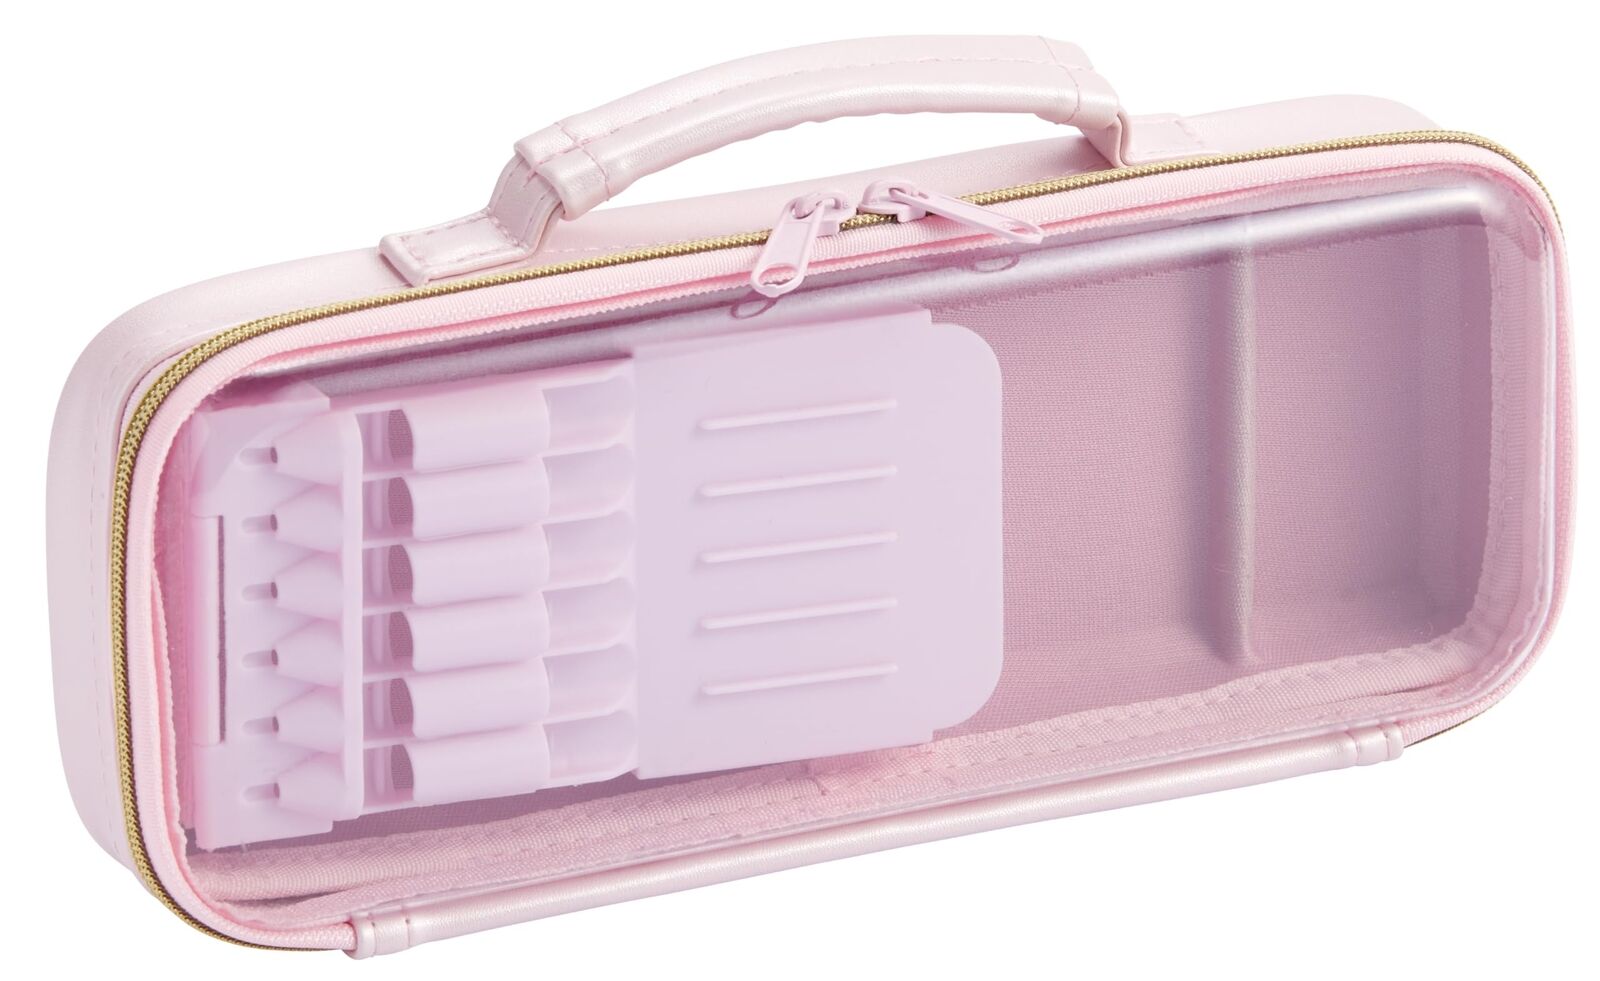 Reimei Fujii Pen Case Top Liner Clear Light Pink